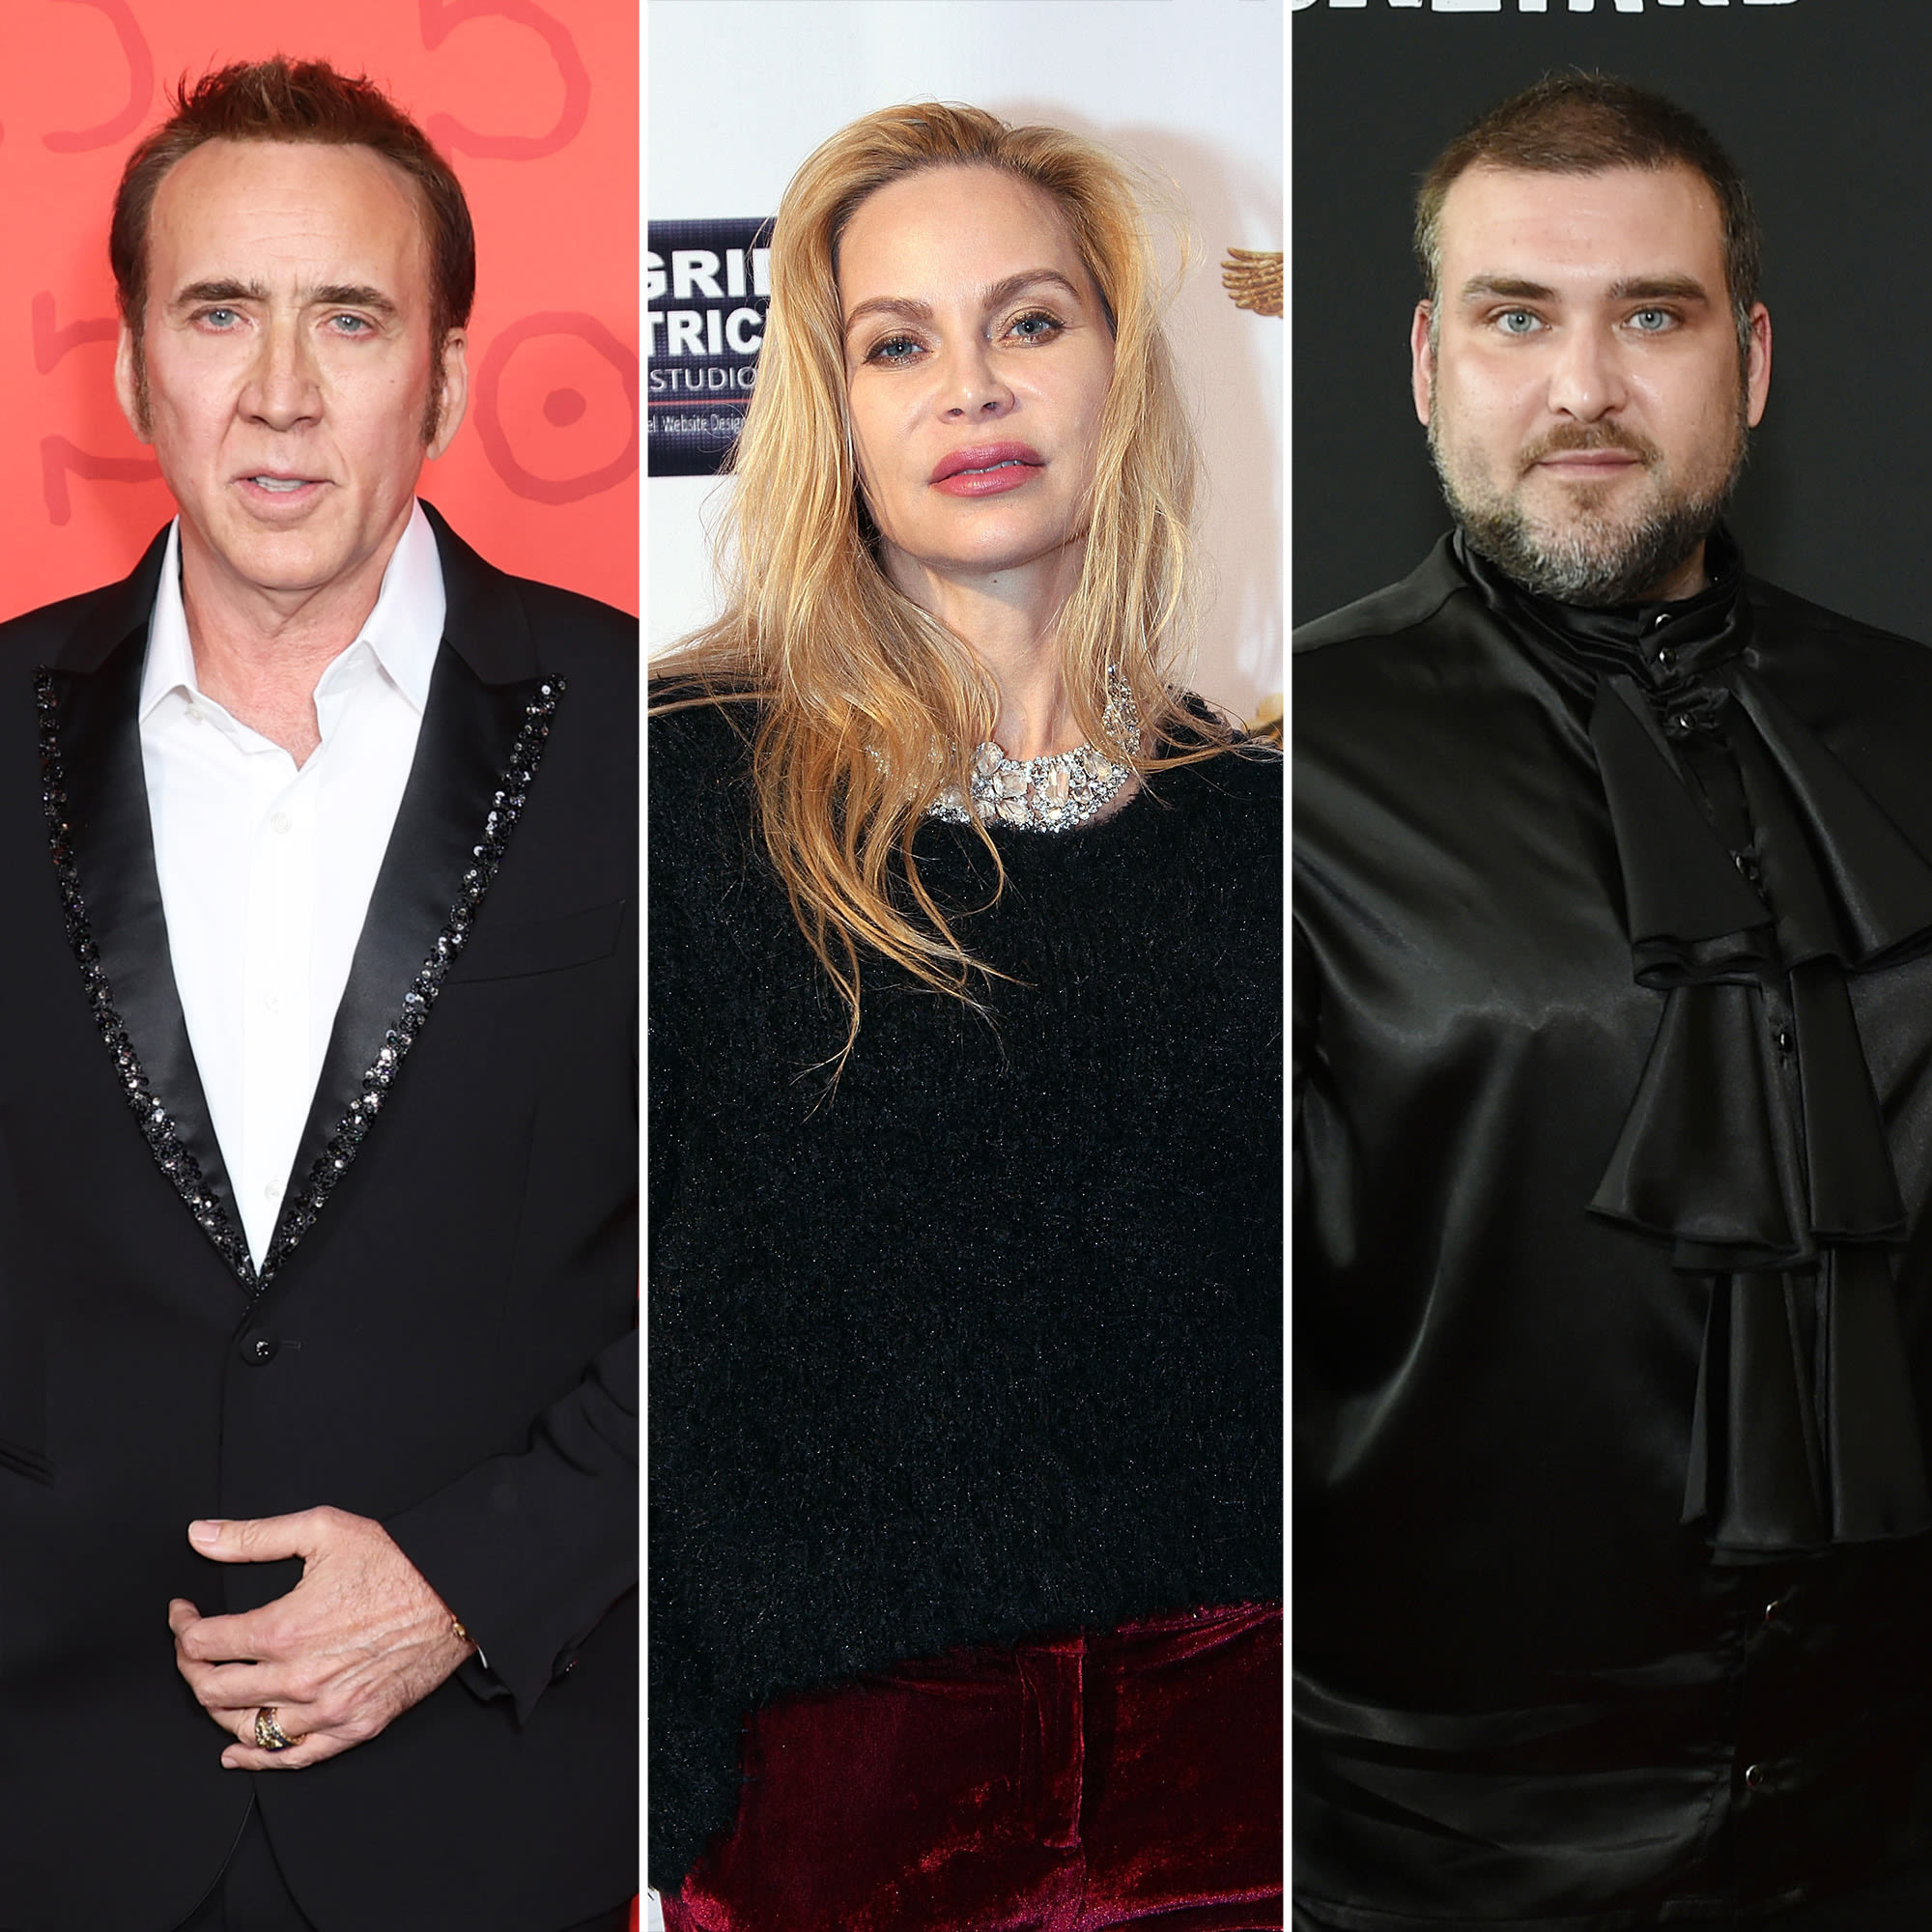 Nicolas Cage’s Ex Christina Fulton Explains What Led to Her Son Weston’s Arrest